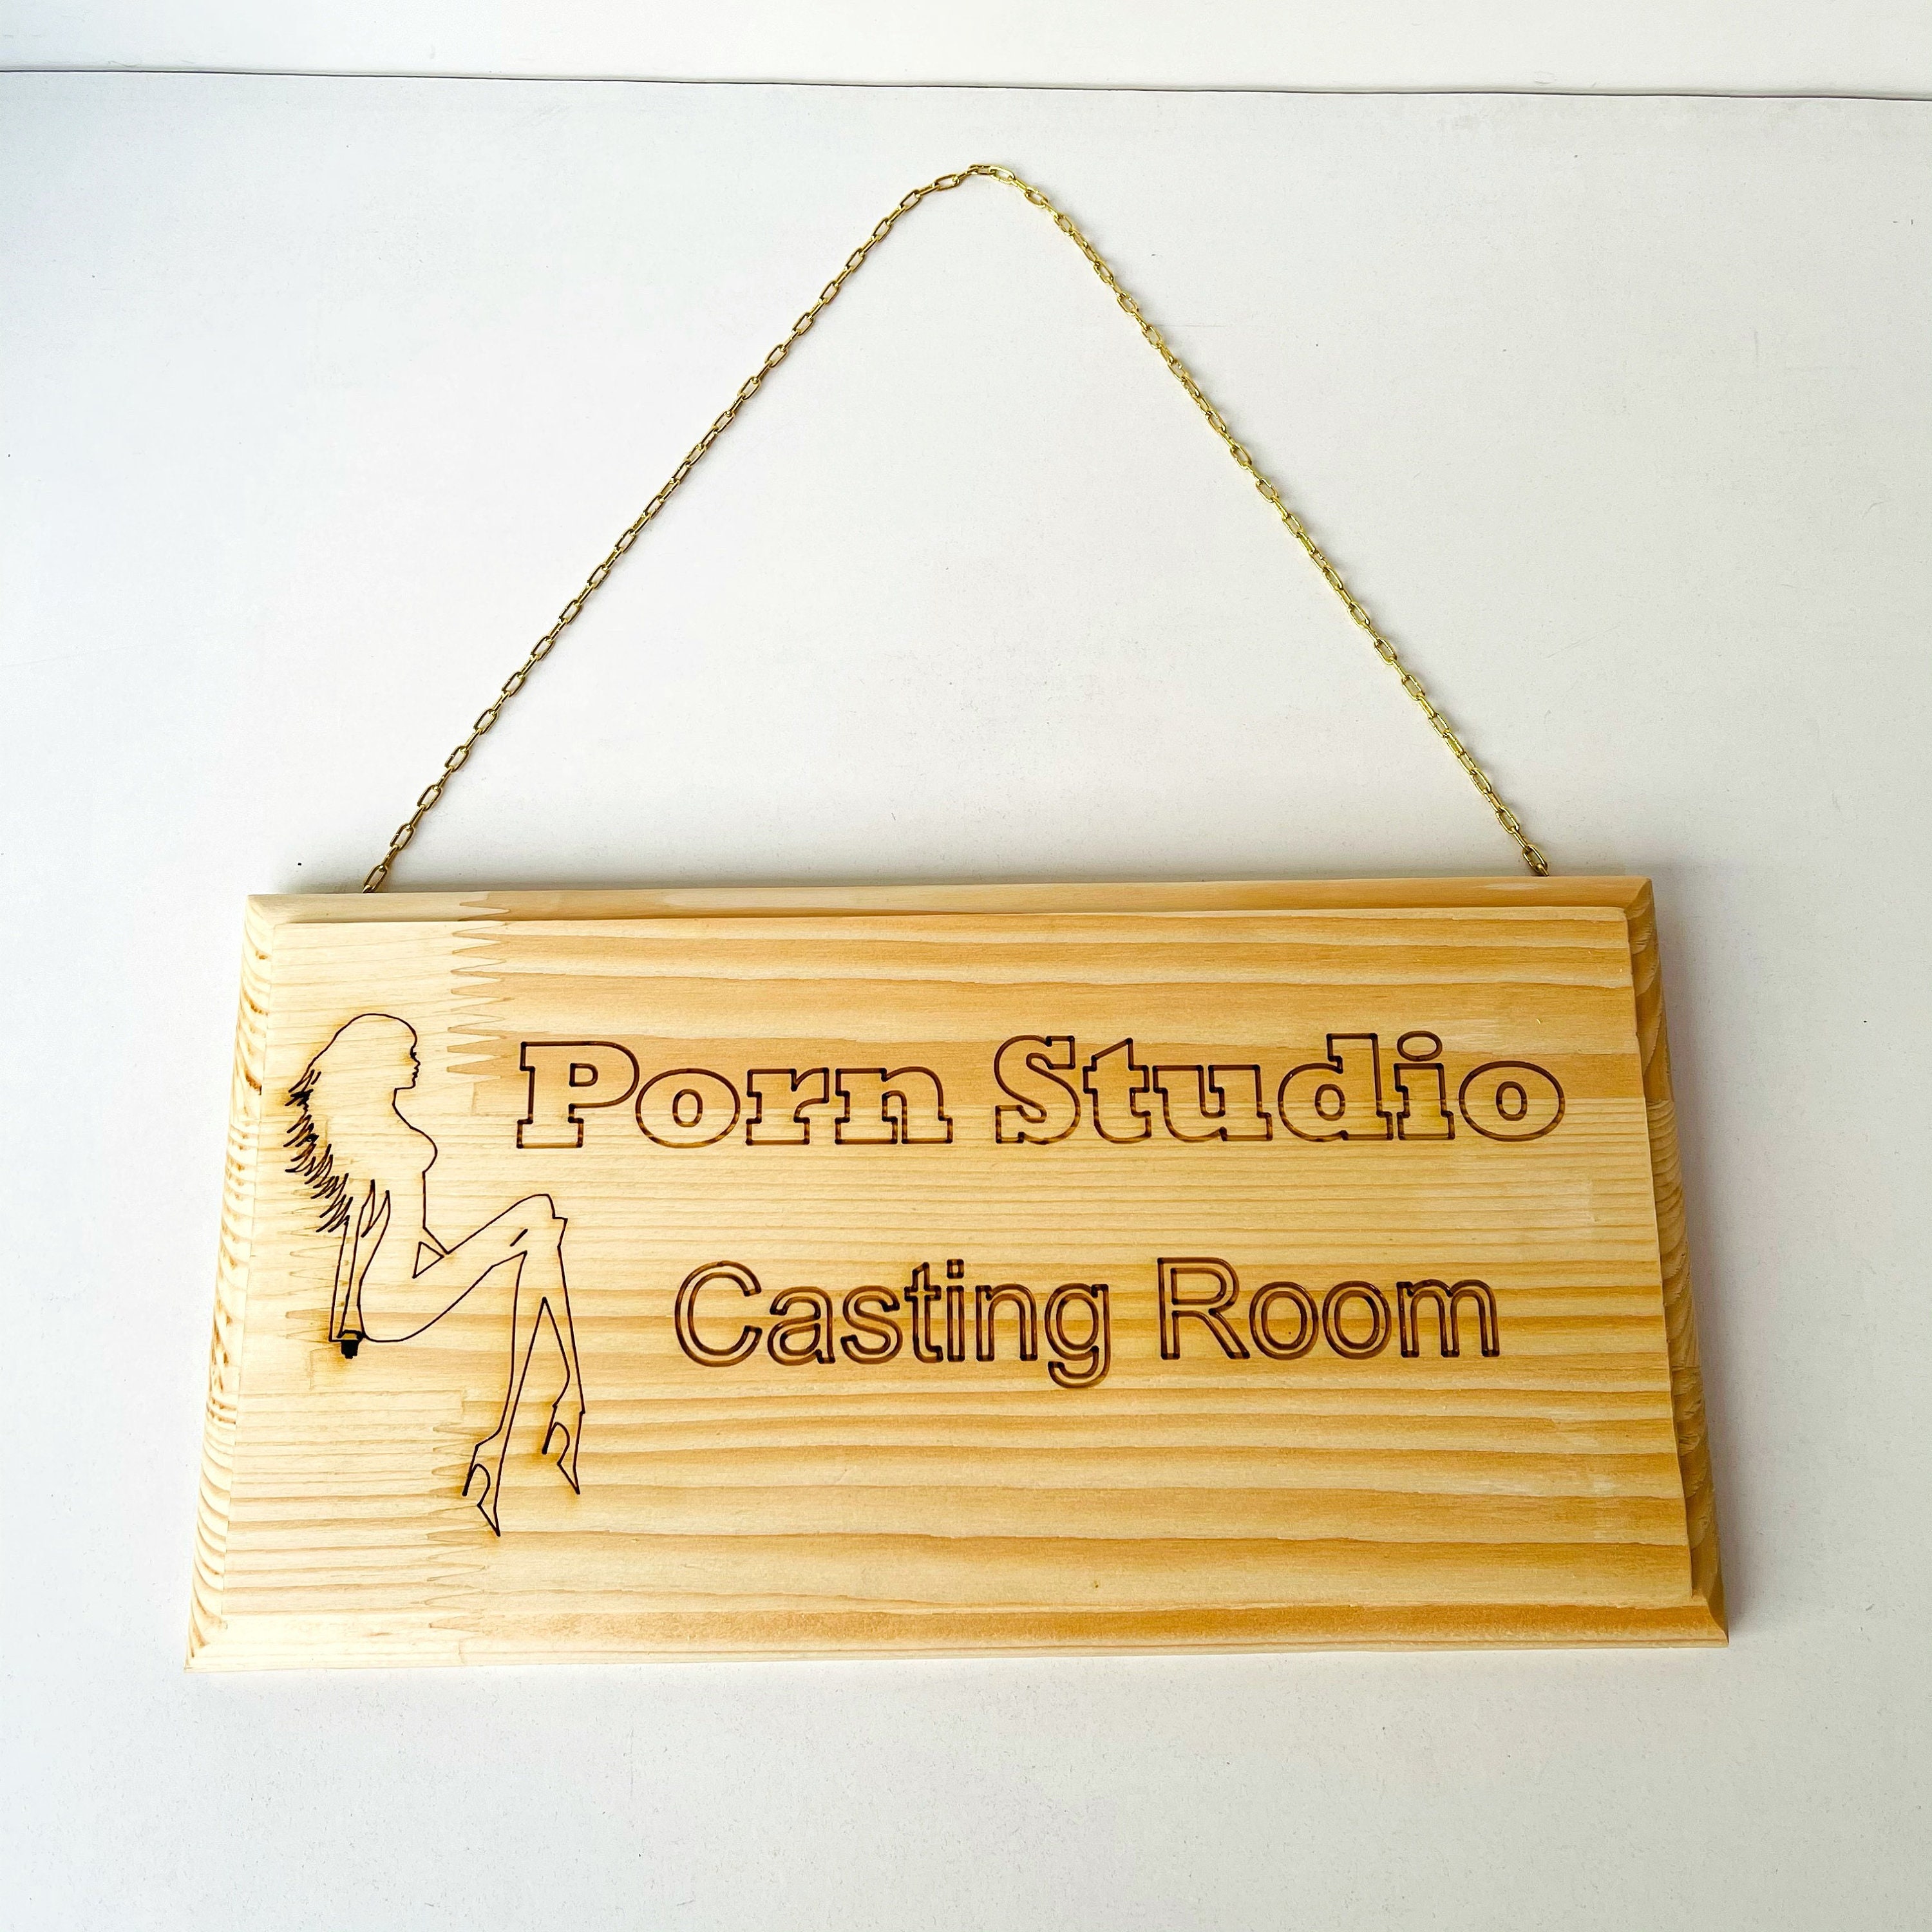 Adult Bedroom Wood Sign Plaque. porn Studio Casting Room - Etsy